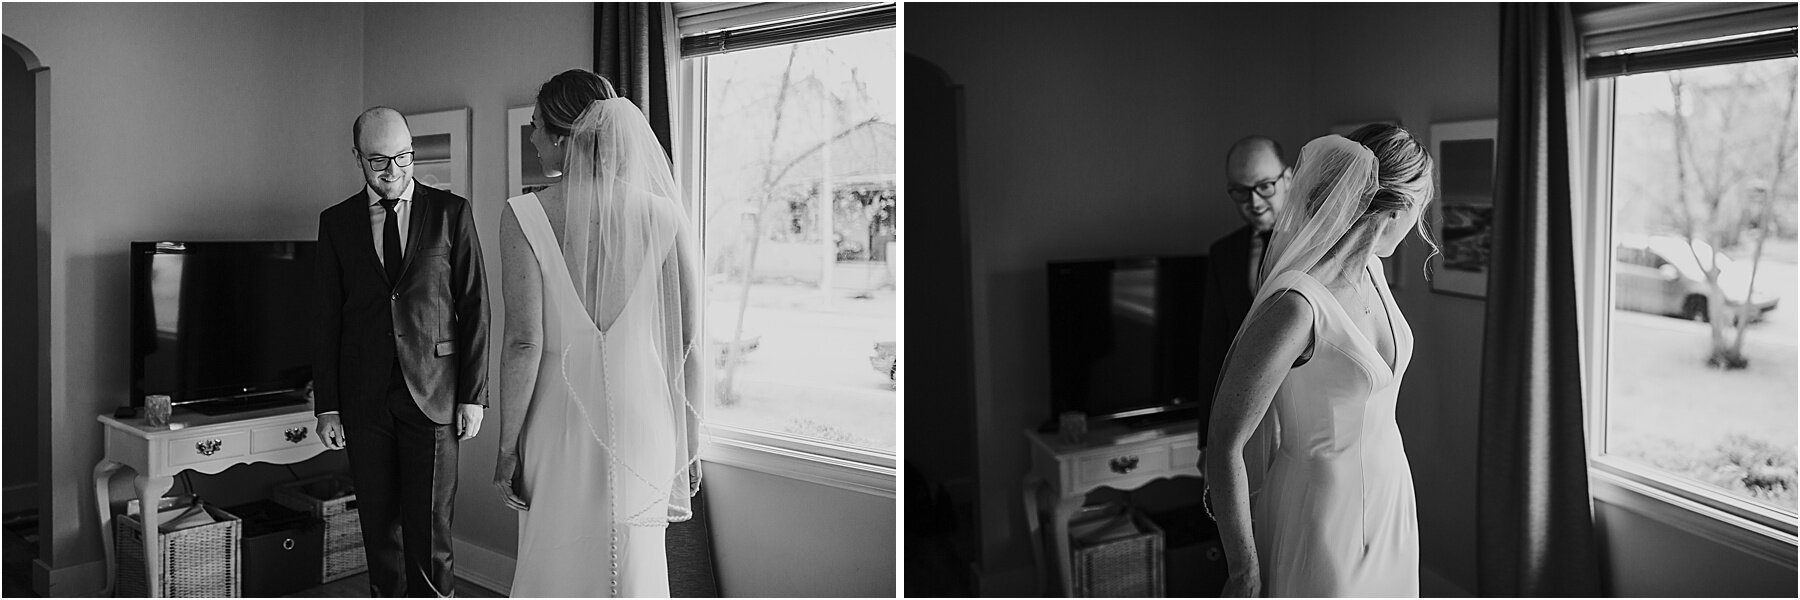 Calgary-Micro-Wedding-Photographer